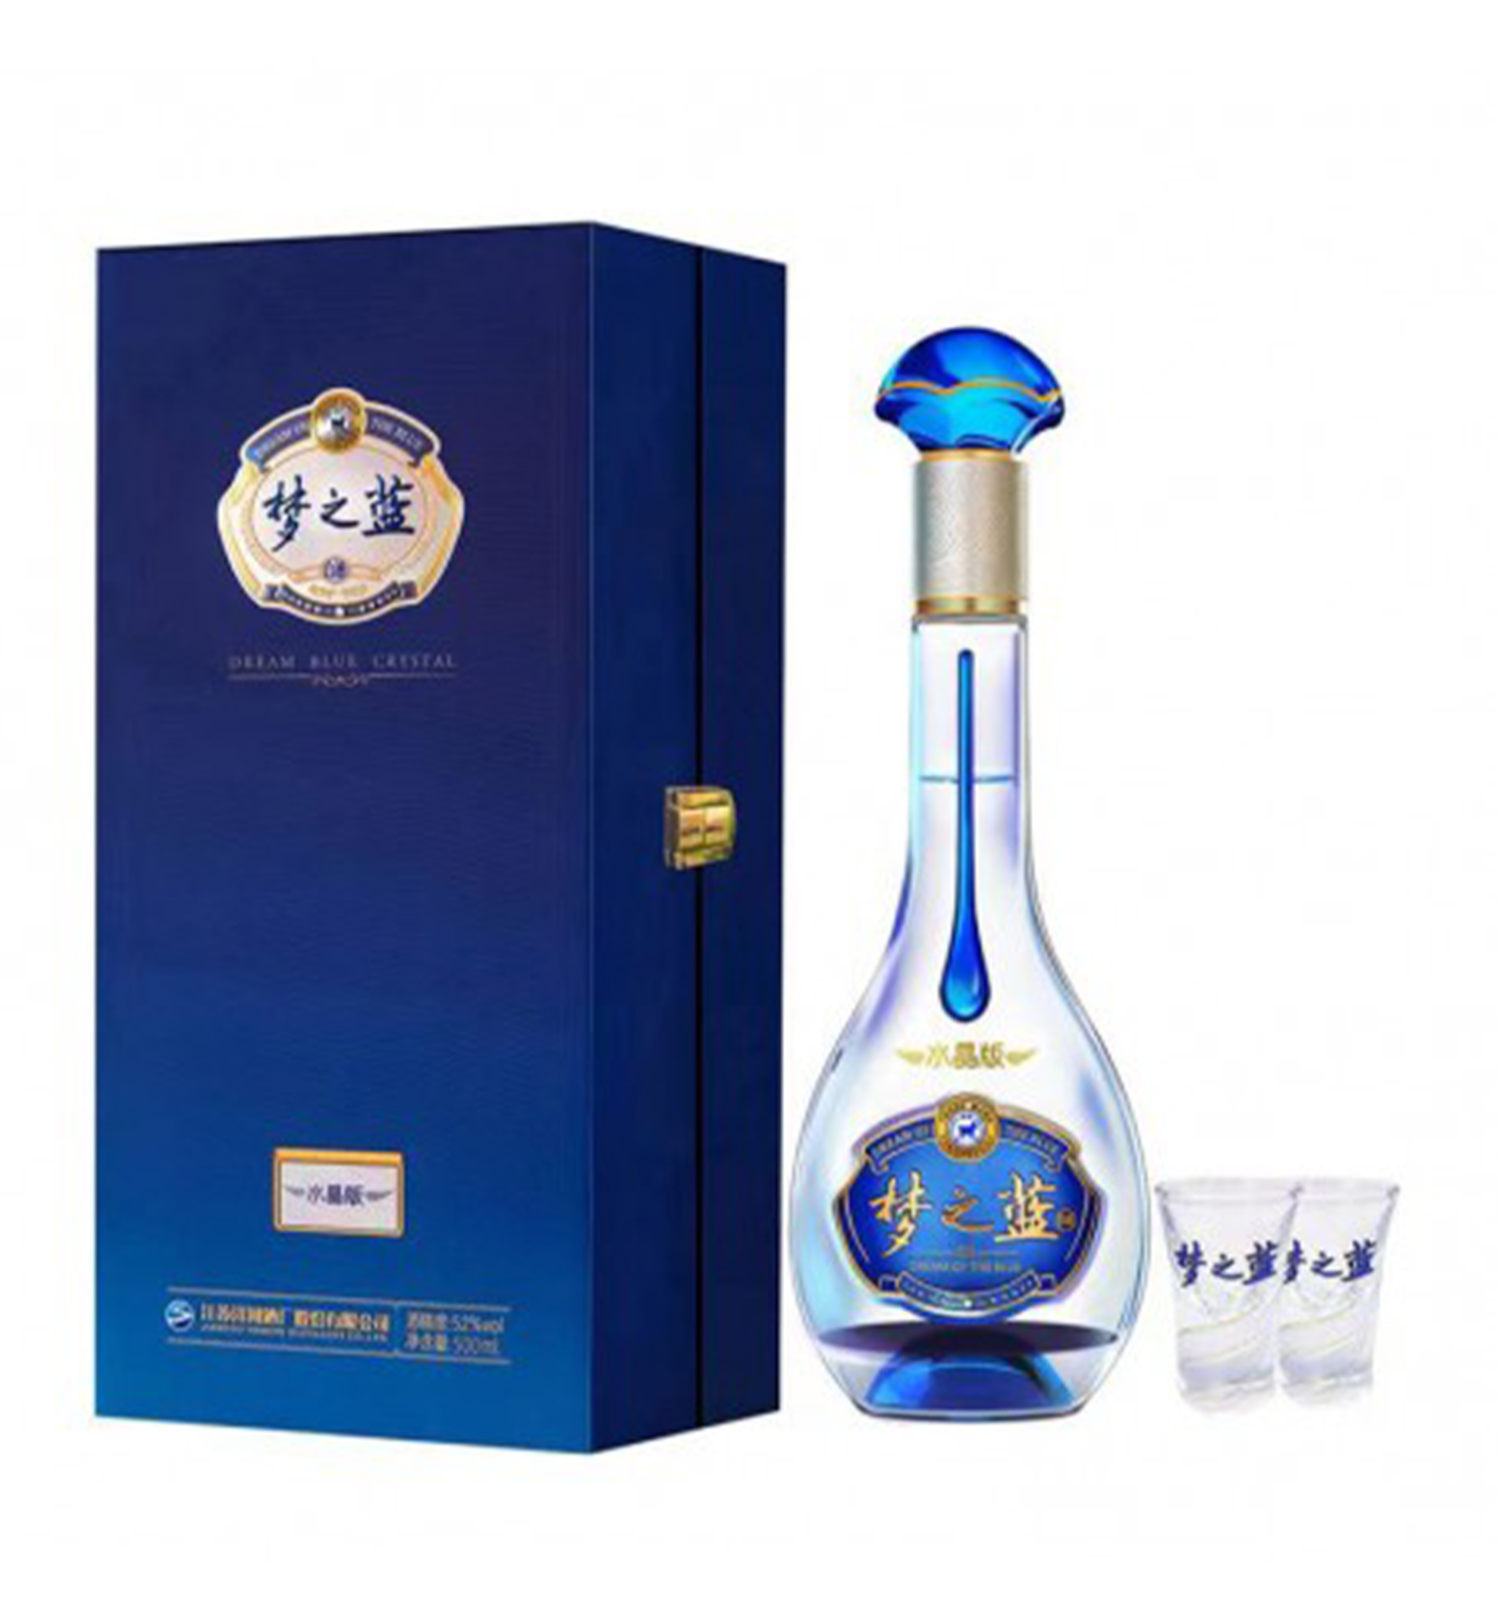 Dream Blue Crystal 梦之蓝水晶版375ml $79 - Uncle Fossil Wine&Spirits